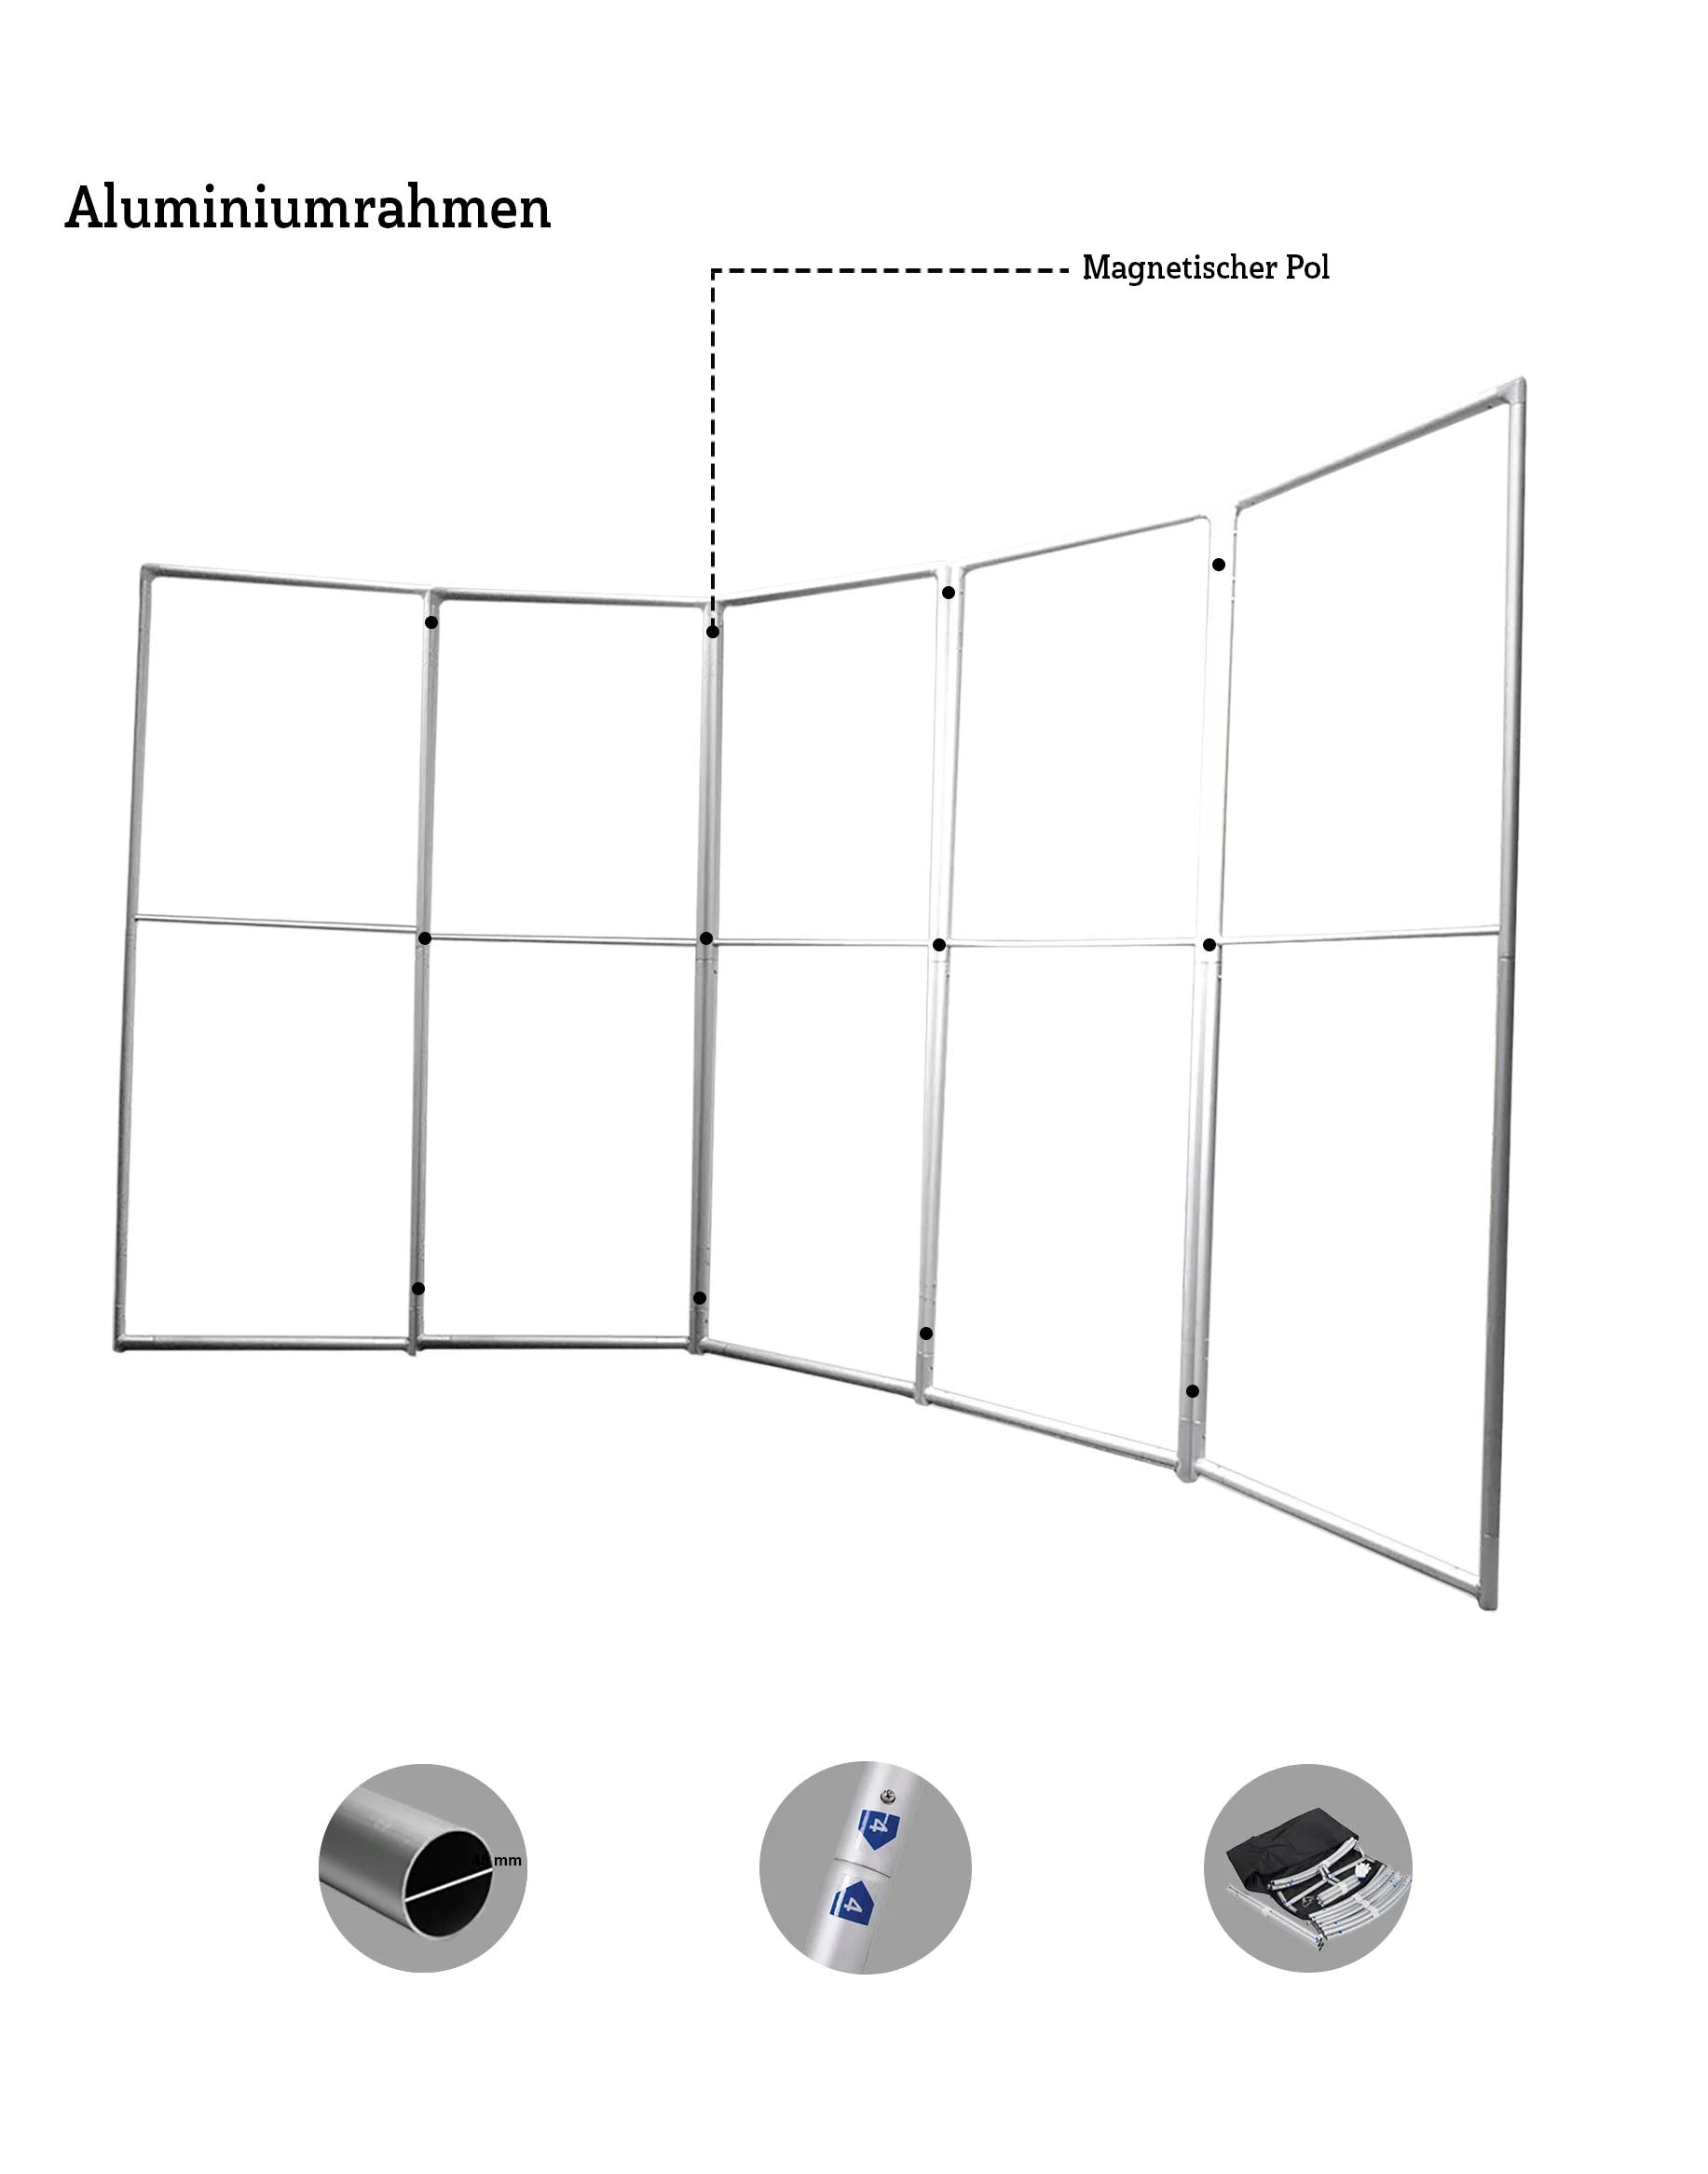 5-Panel-Magnetdisplay Aluminiumrahmen